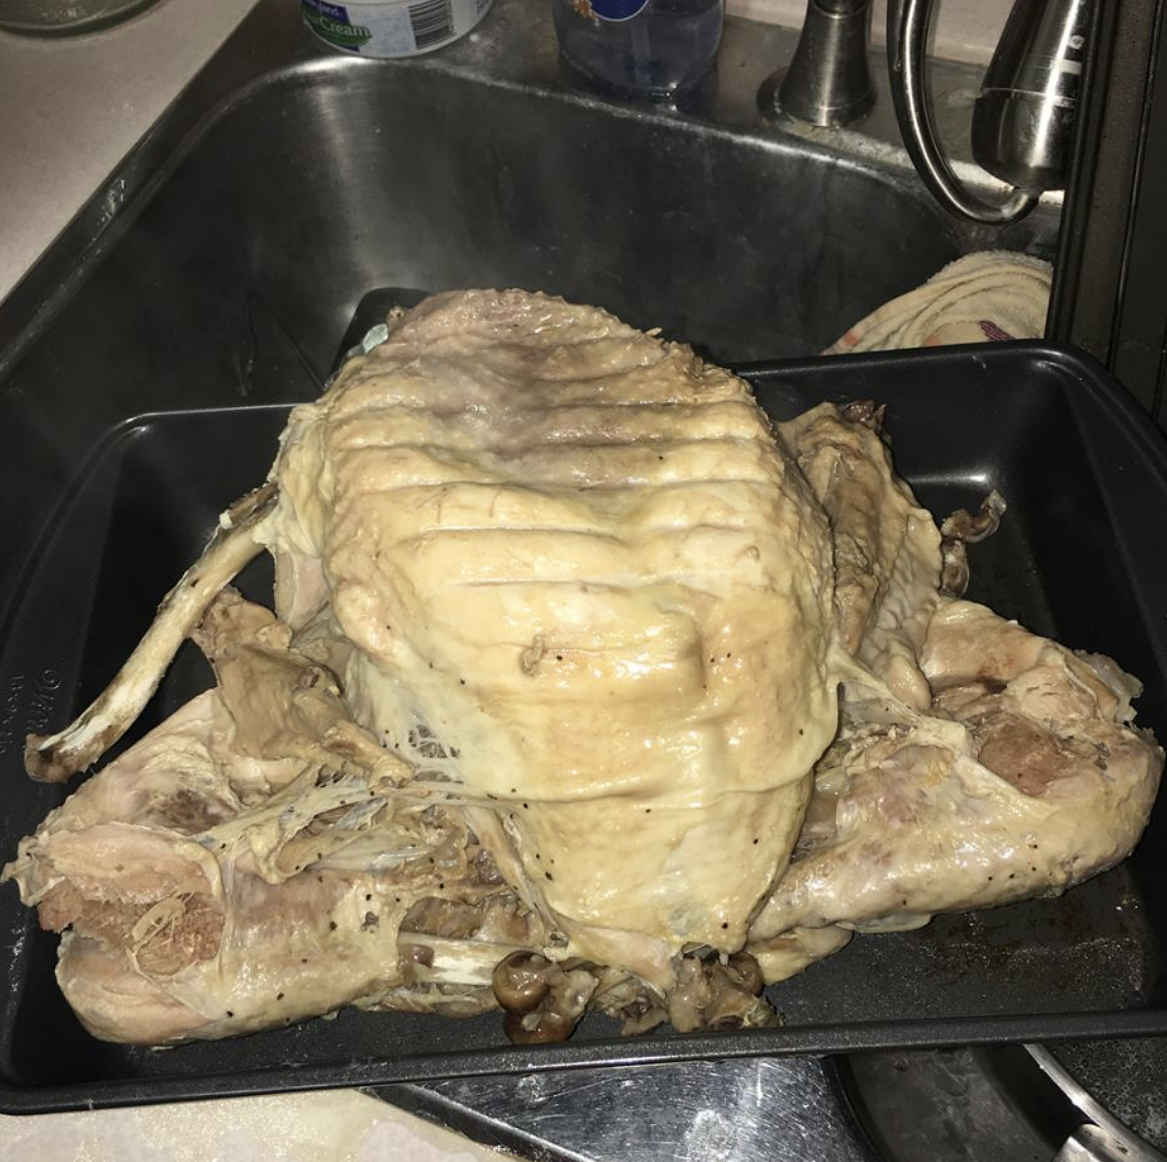 unappetizing turkey that looks old